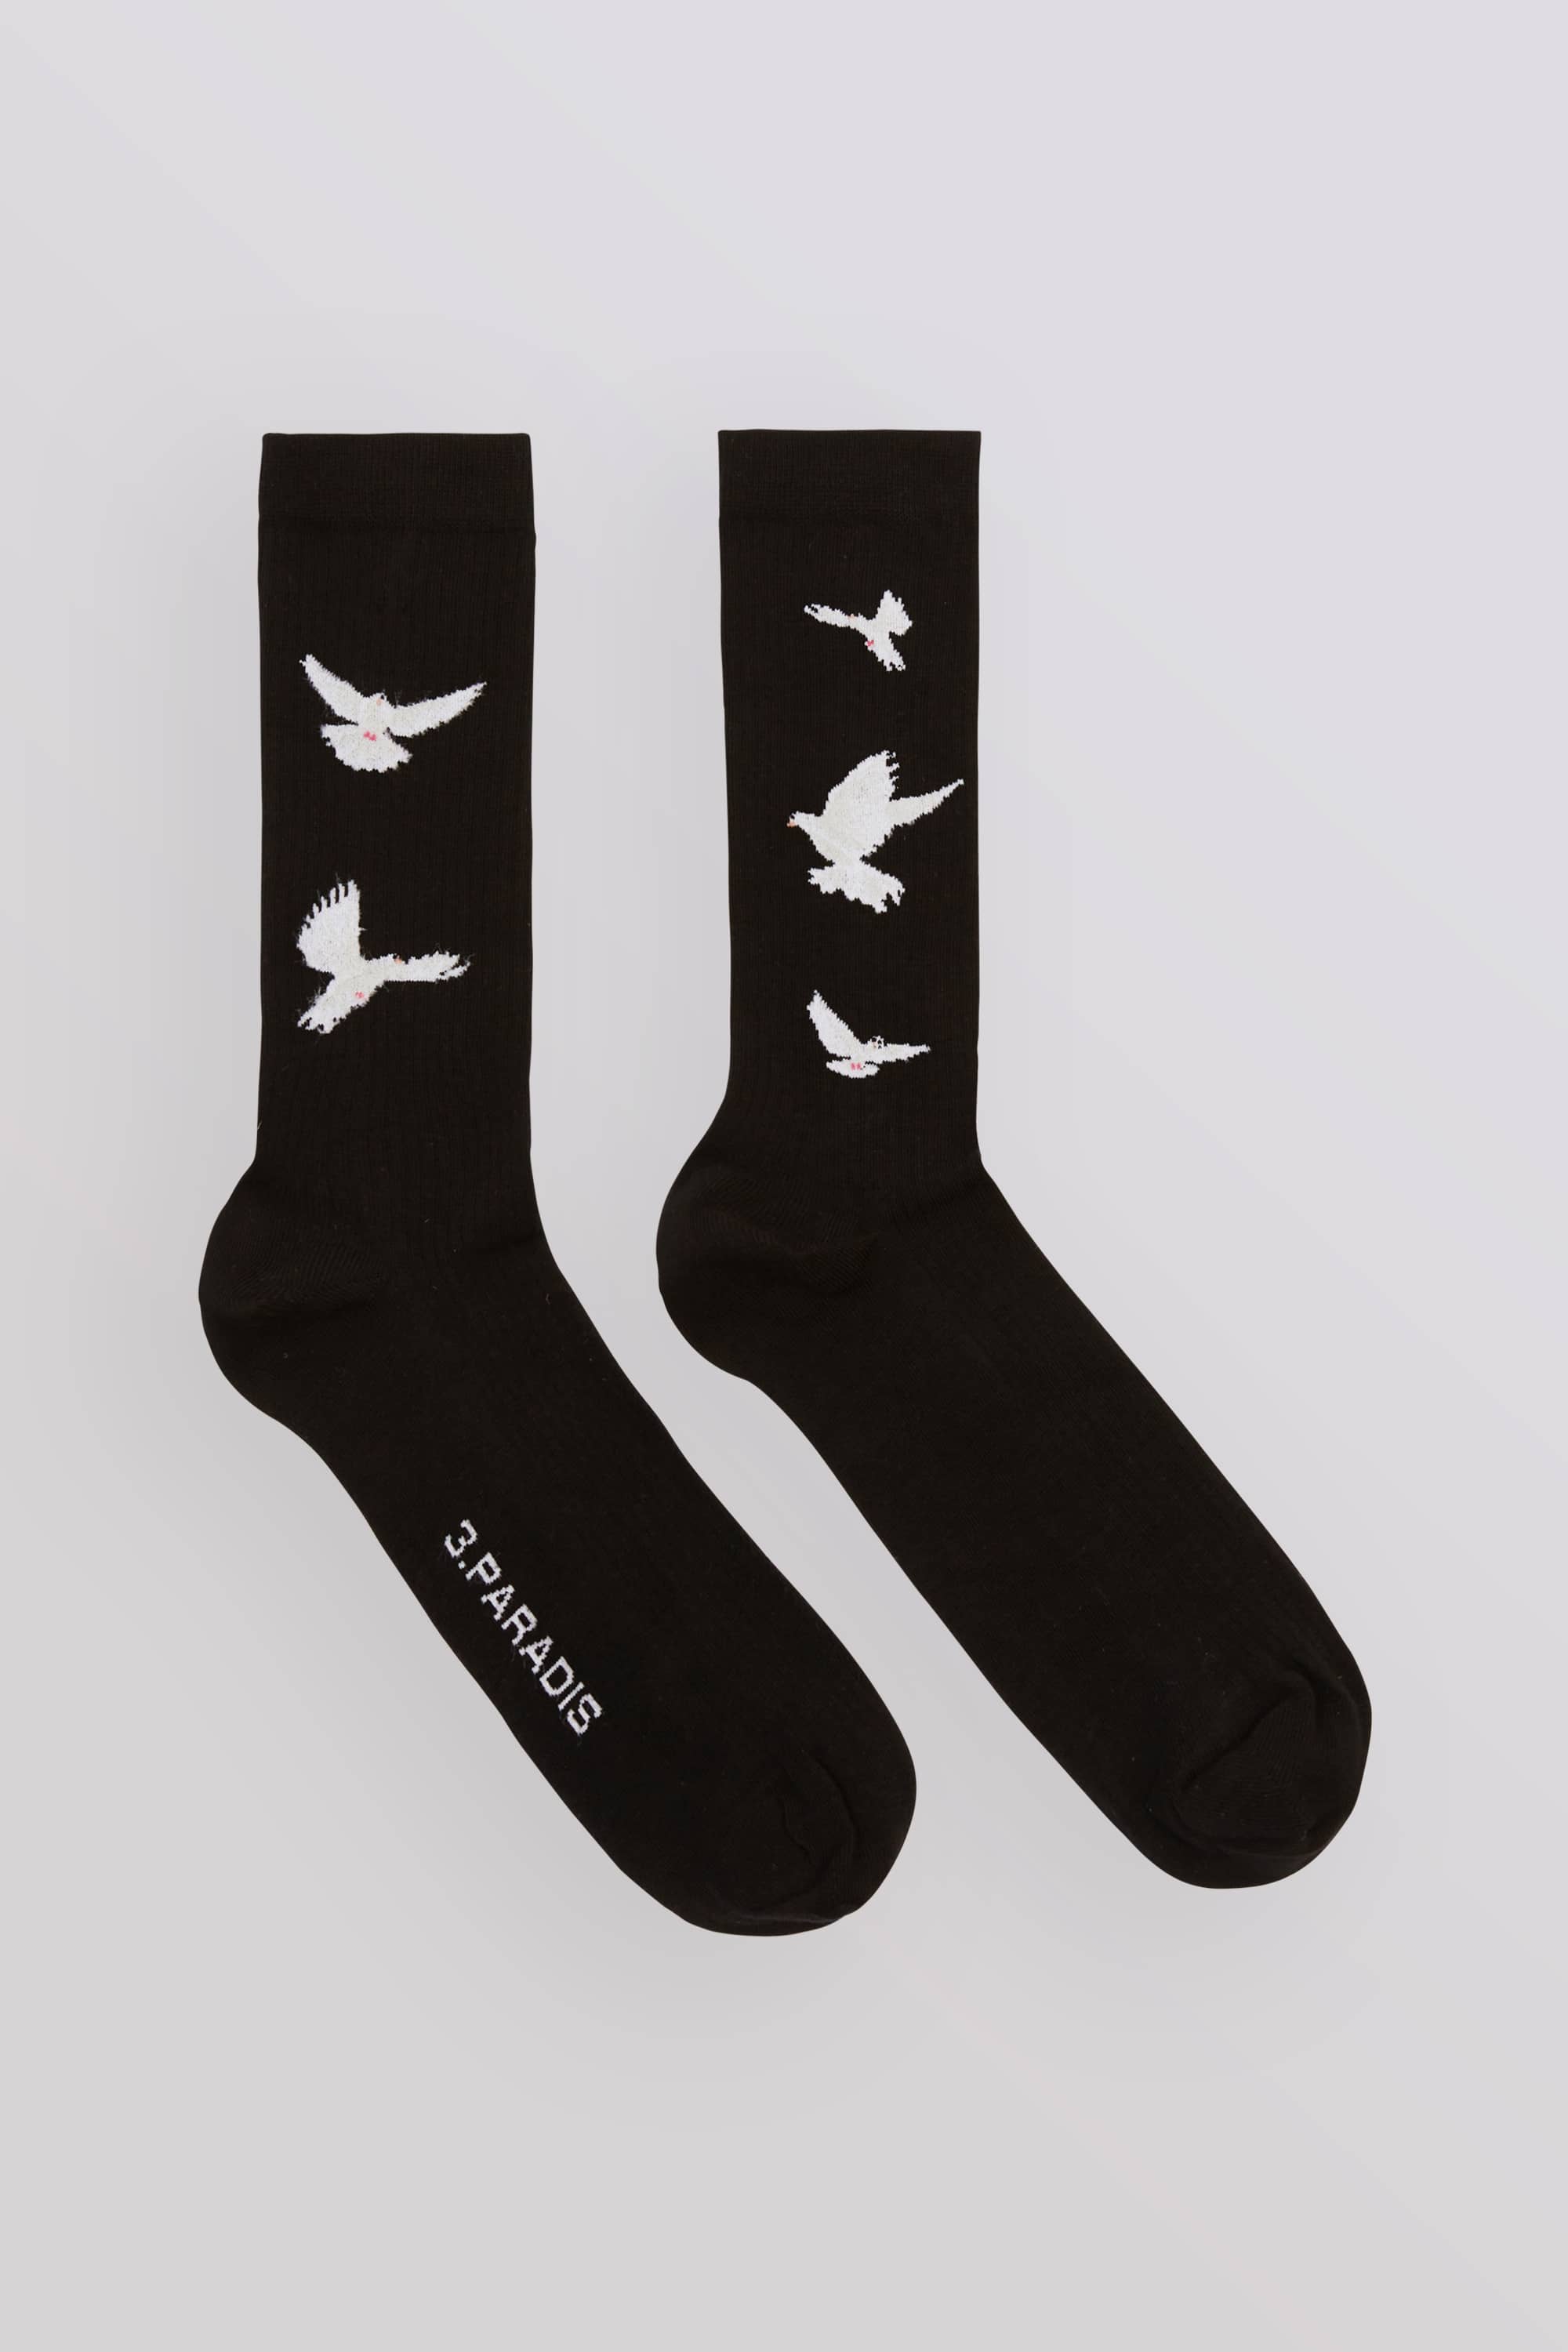 Freedom Doves Socks